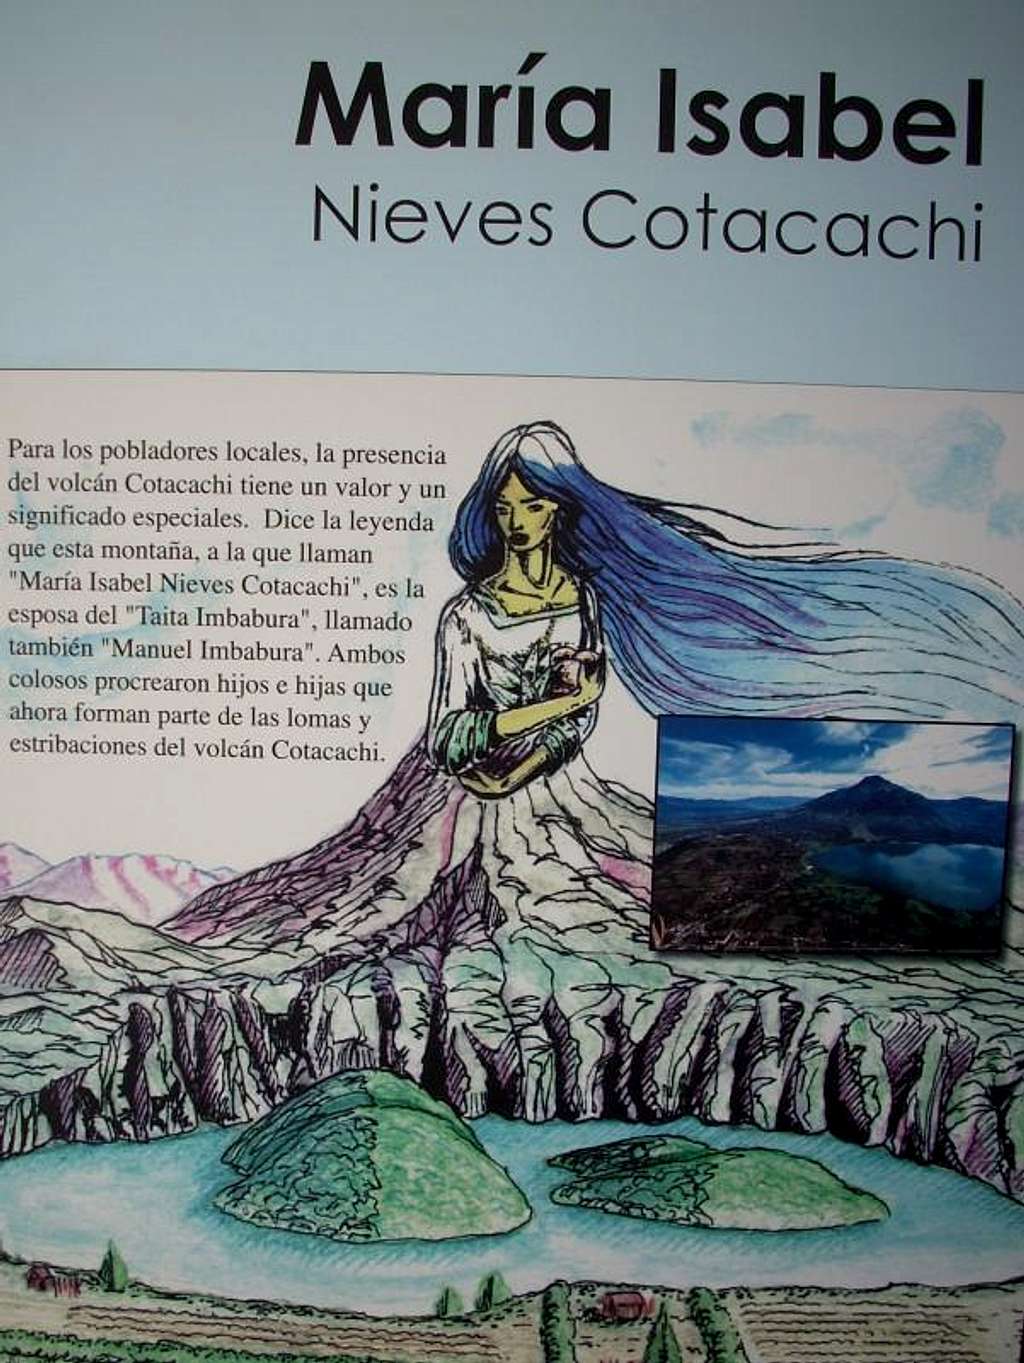 Legend about Volcano Cotacachi